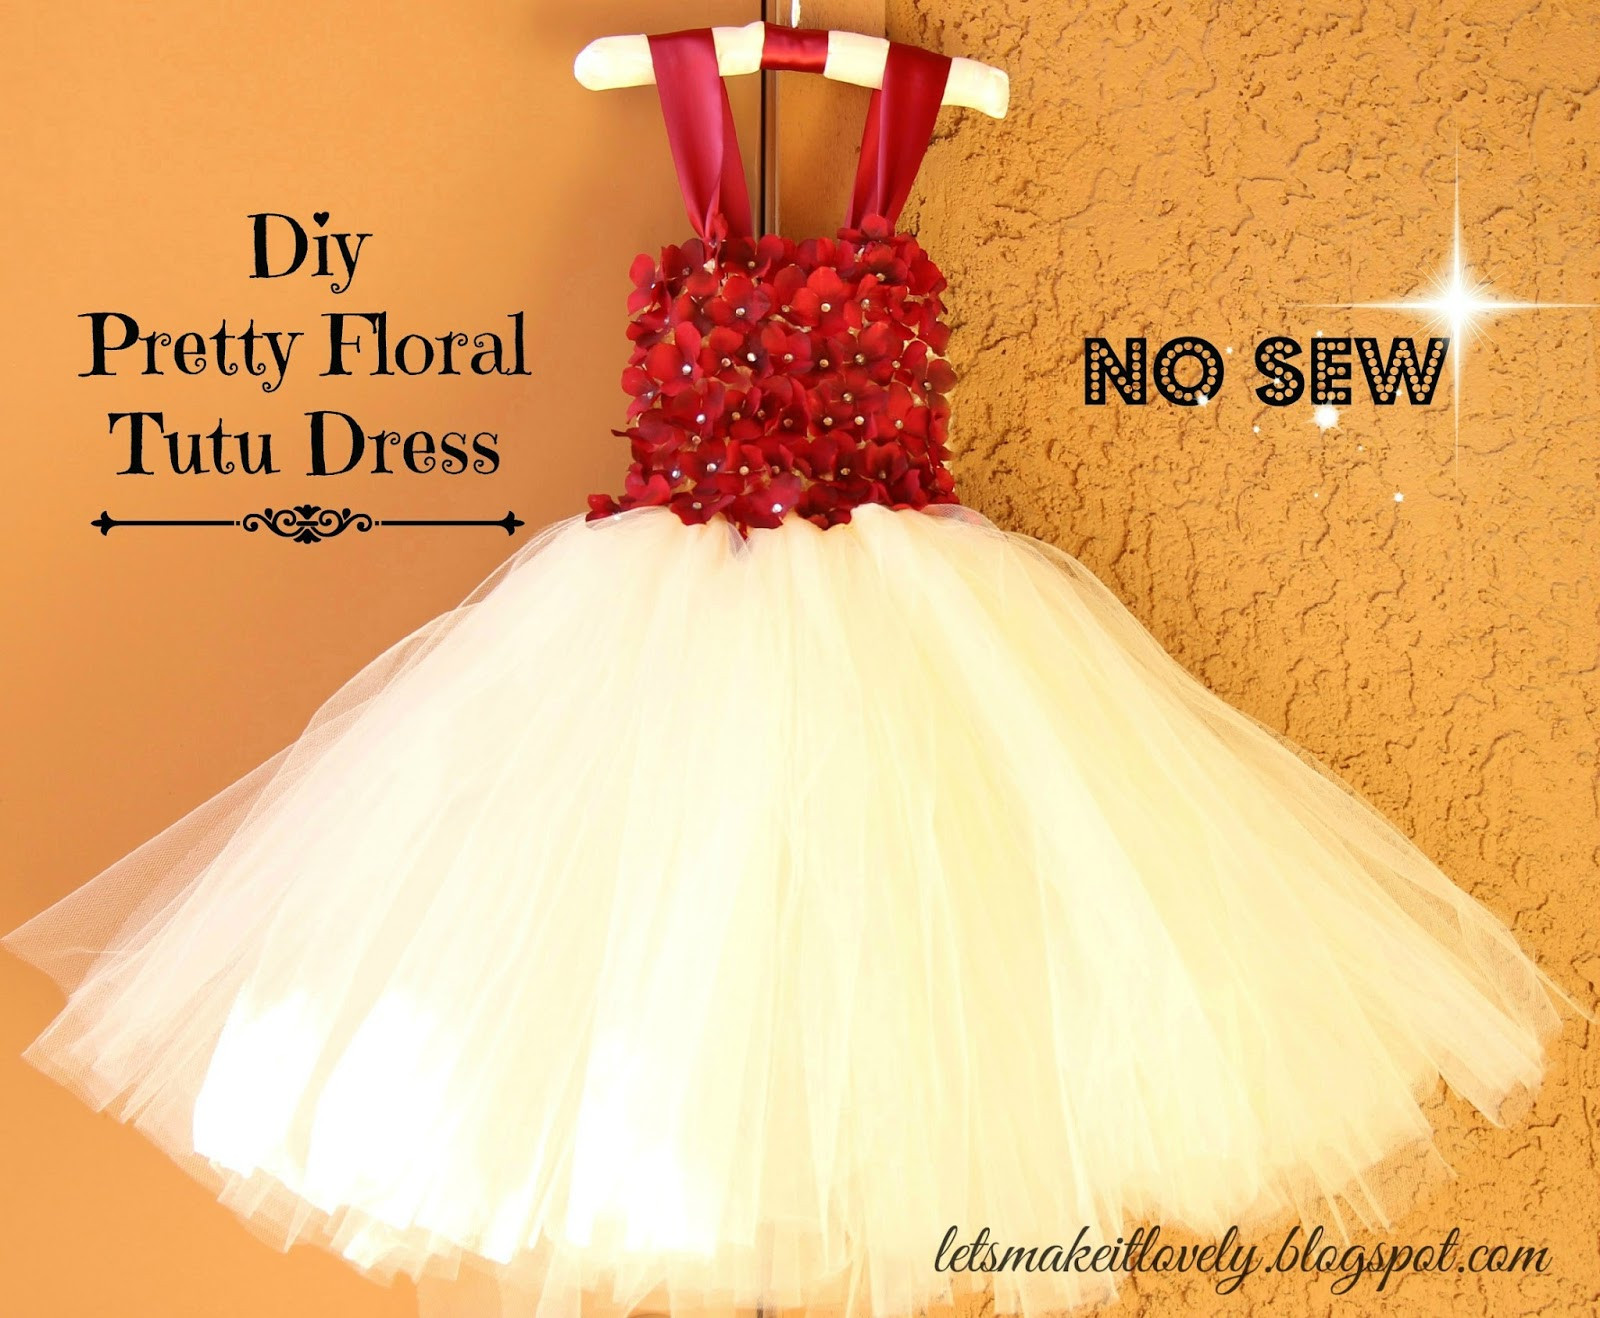 DIY Tutu Dresses For Toddlers
 Let s make it lovely DIY Flower girl dress or Tutu dress